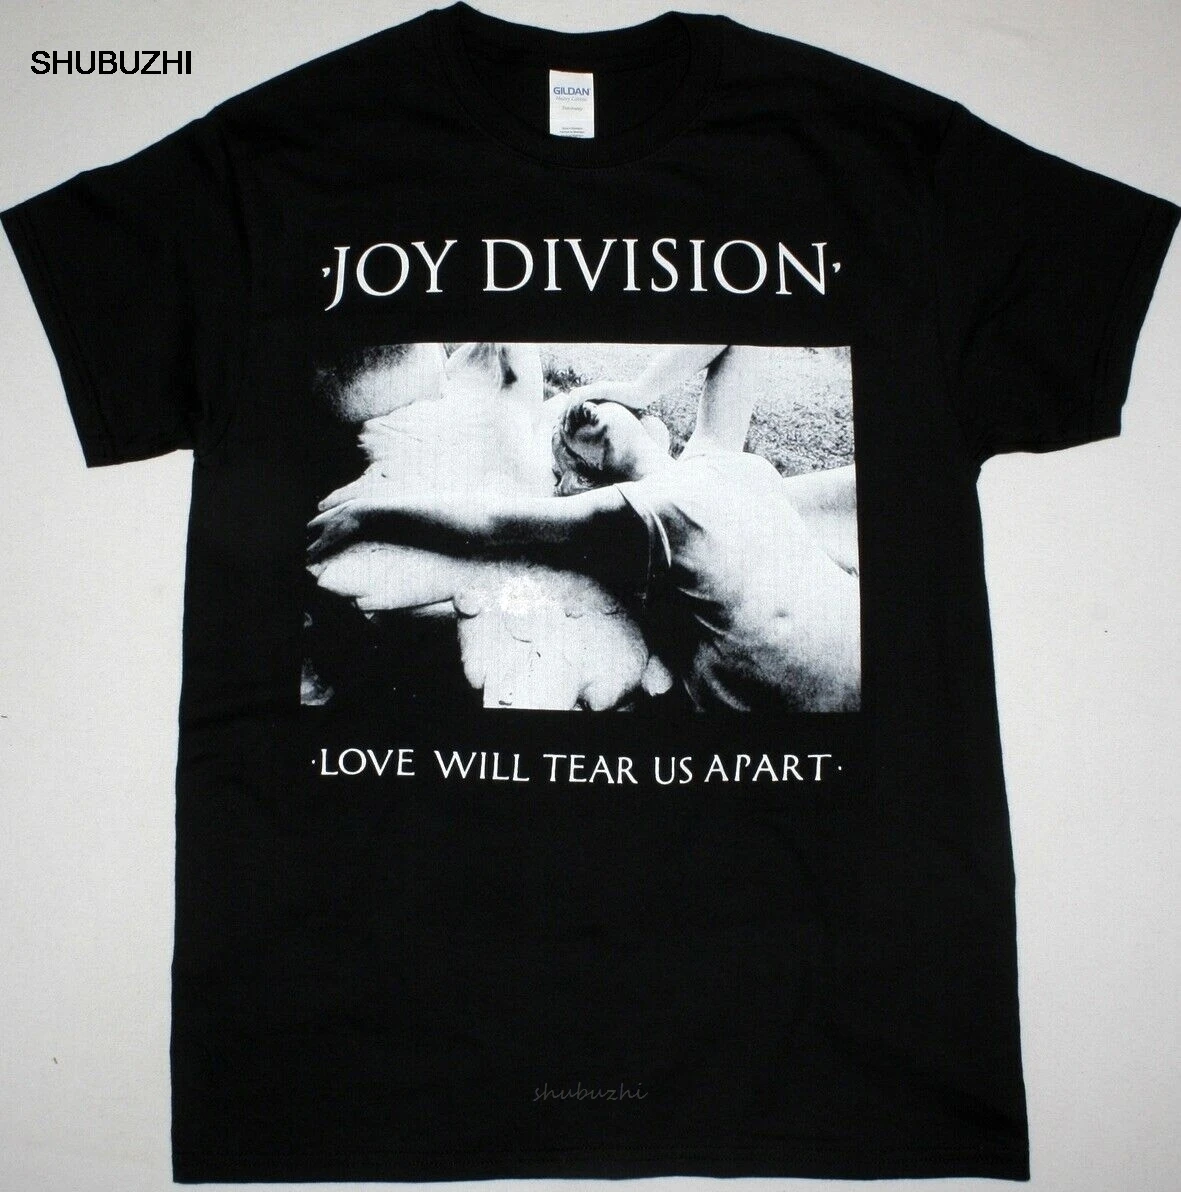 Мужская хлопковая футболка JOY DIVISION черная с надписью LOVE WILL TEAR US APART новый заказ в